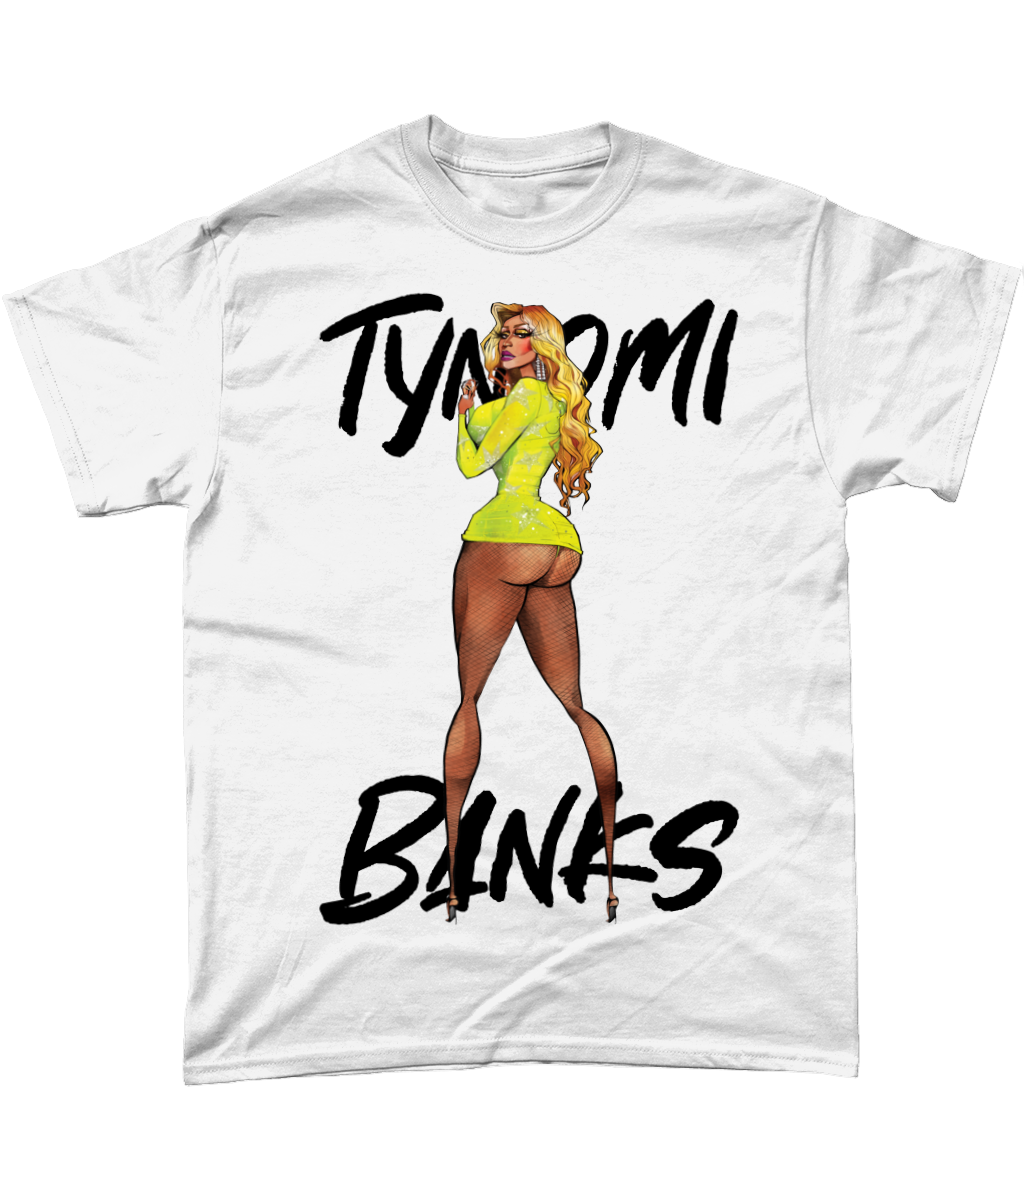 Tynomi Banks - Tshirt - SNATCHED MERCH